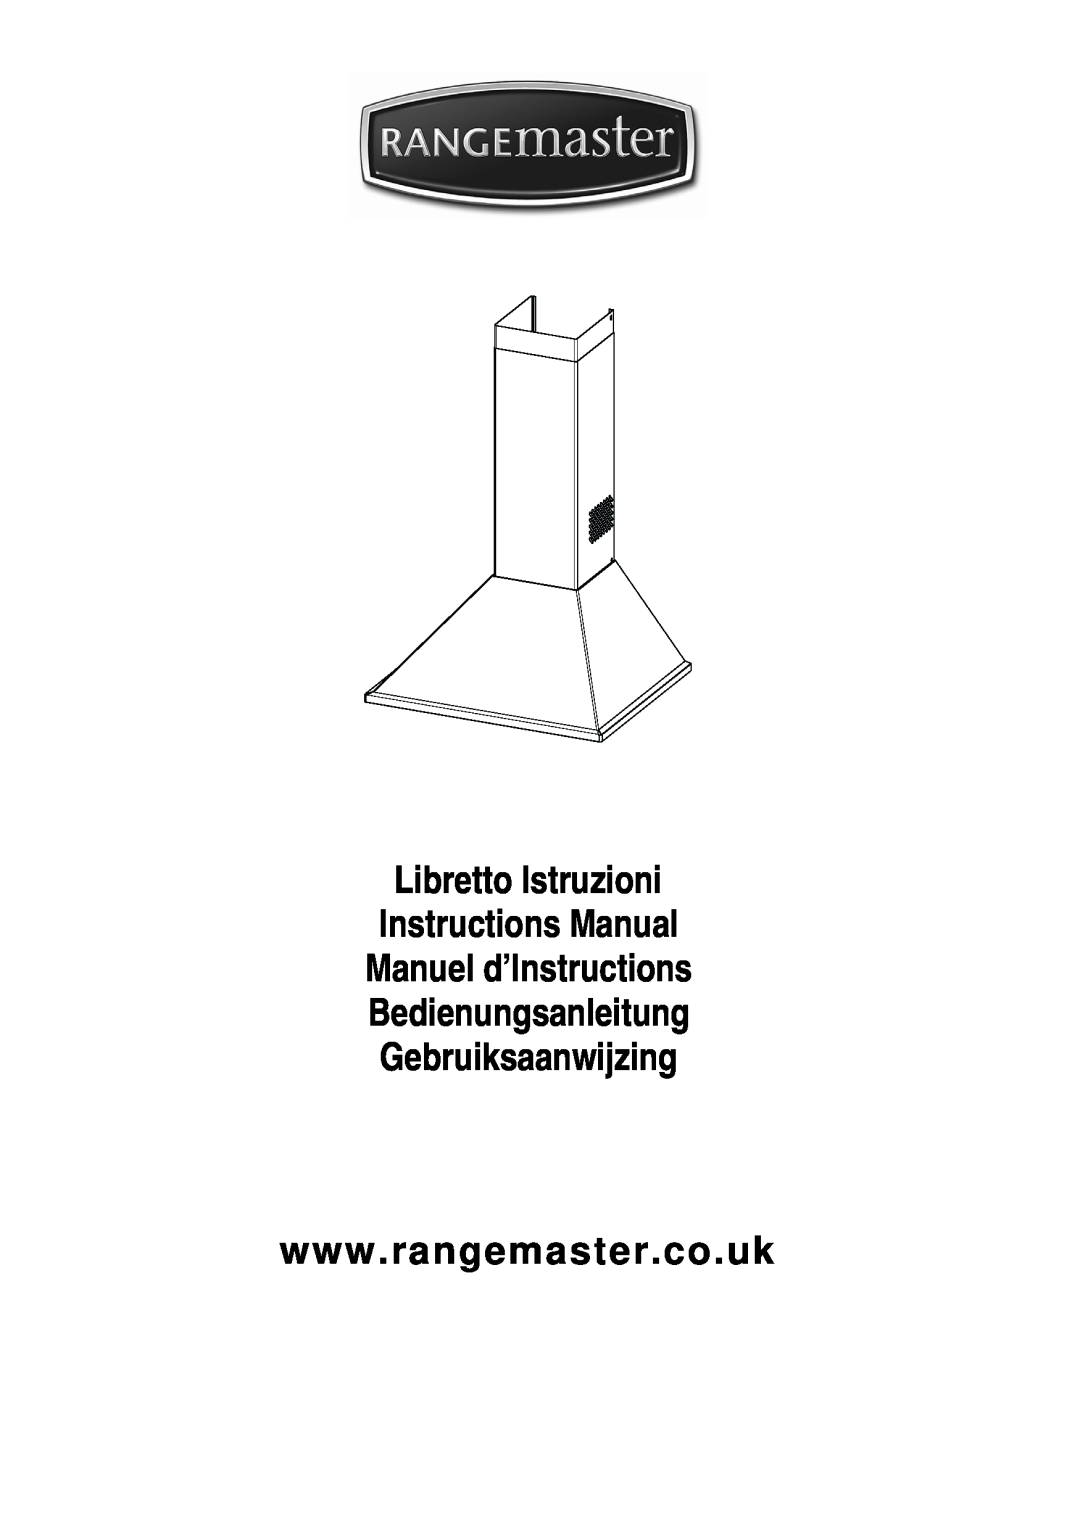 Rangemaster Chimney Hood manual Libretto Istruzioni Instructions Manual, Manuel d’Instructions Bedienungsanleitung 